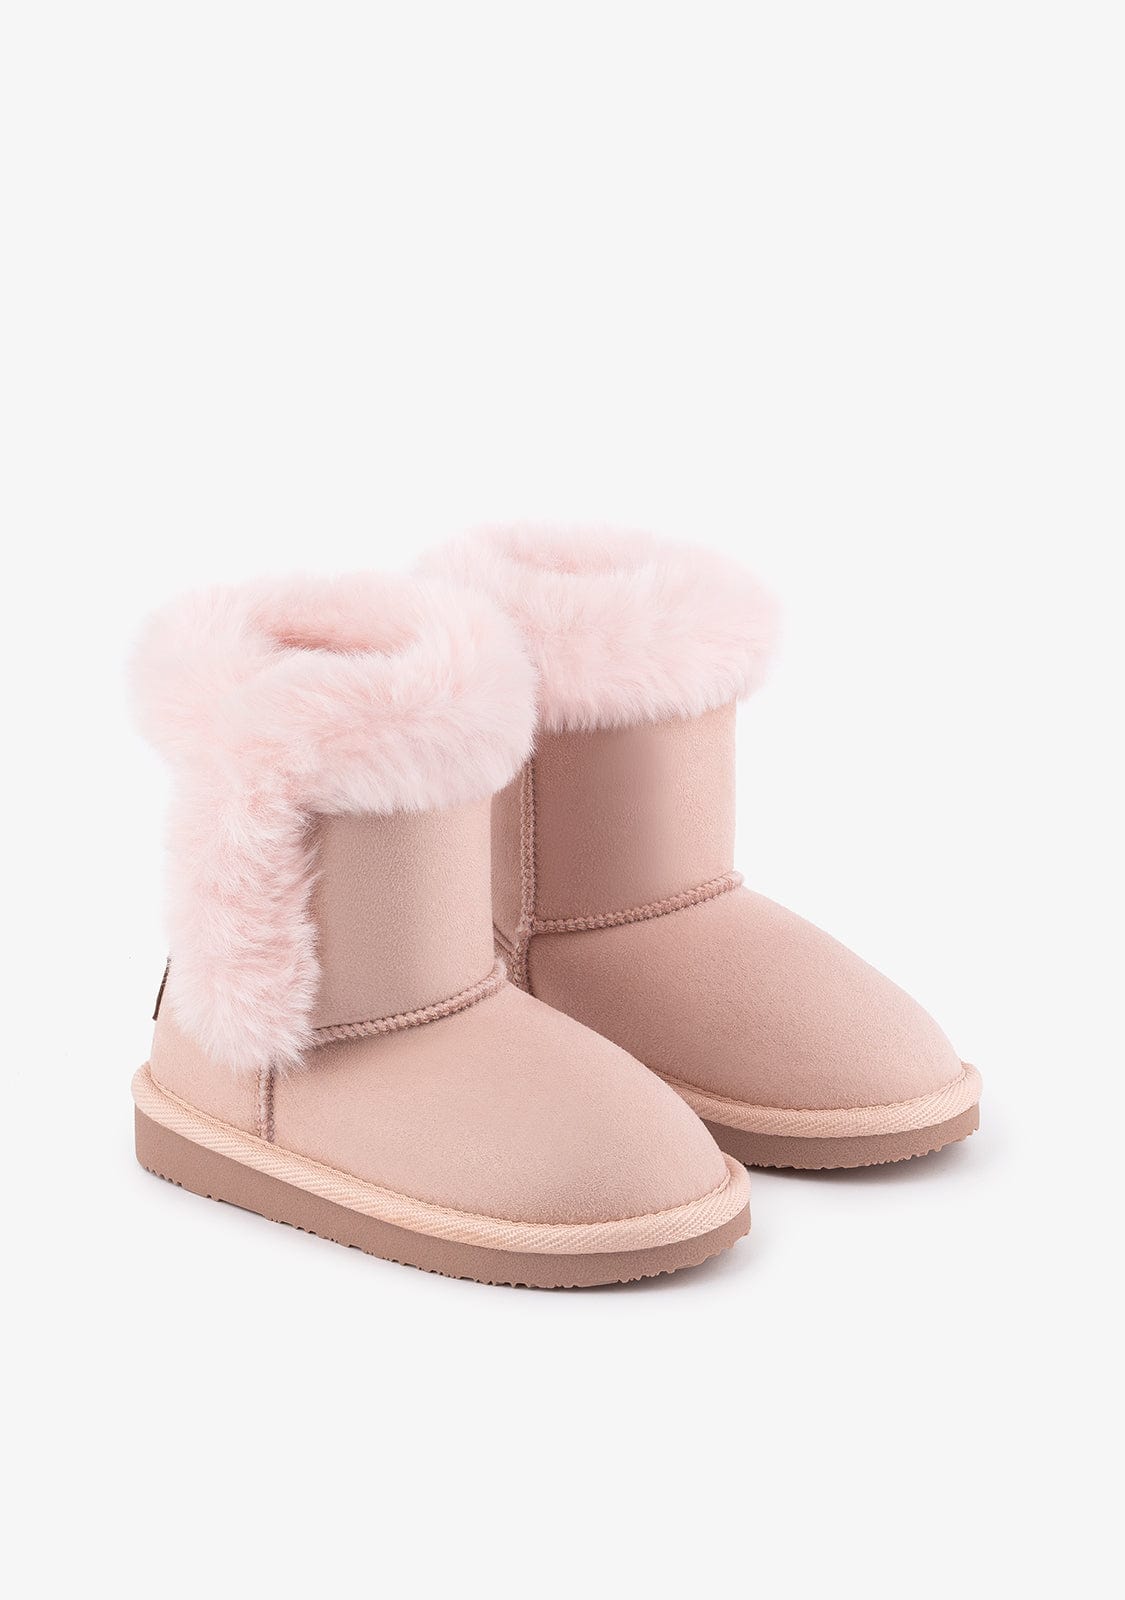 B&W JUNIOR Shoes Girl's Pink Fur Australian Boots Water Repellent B&W